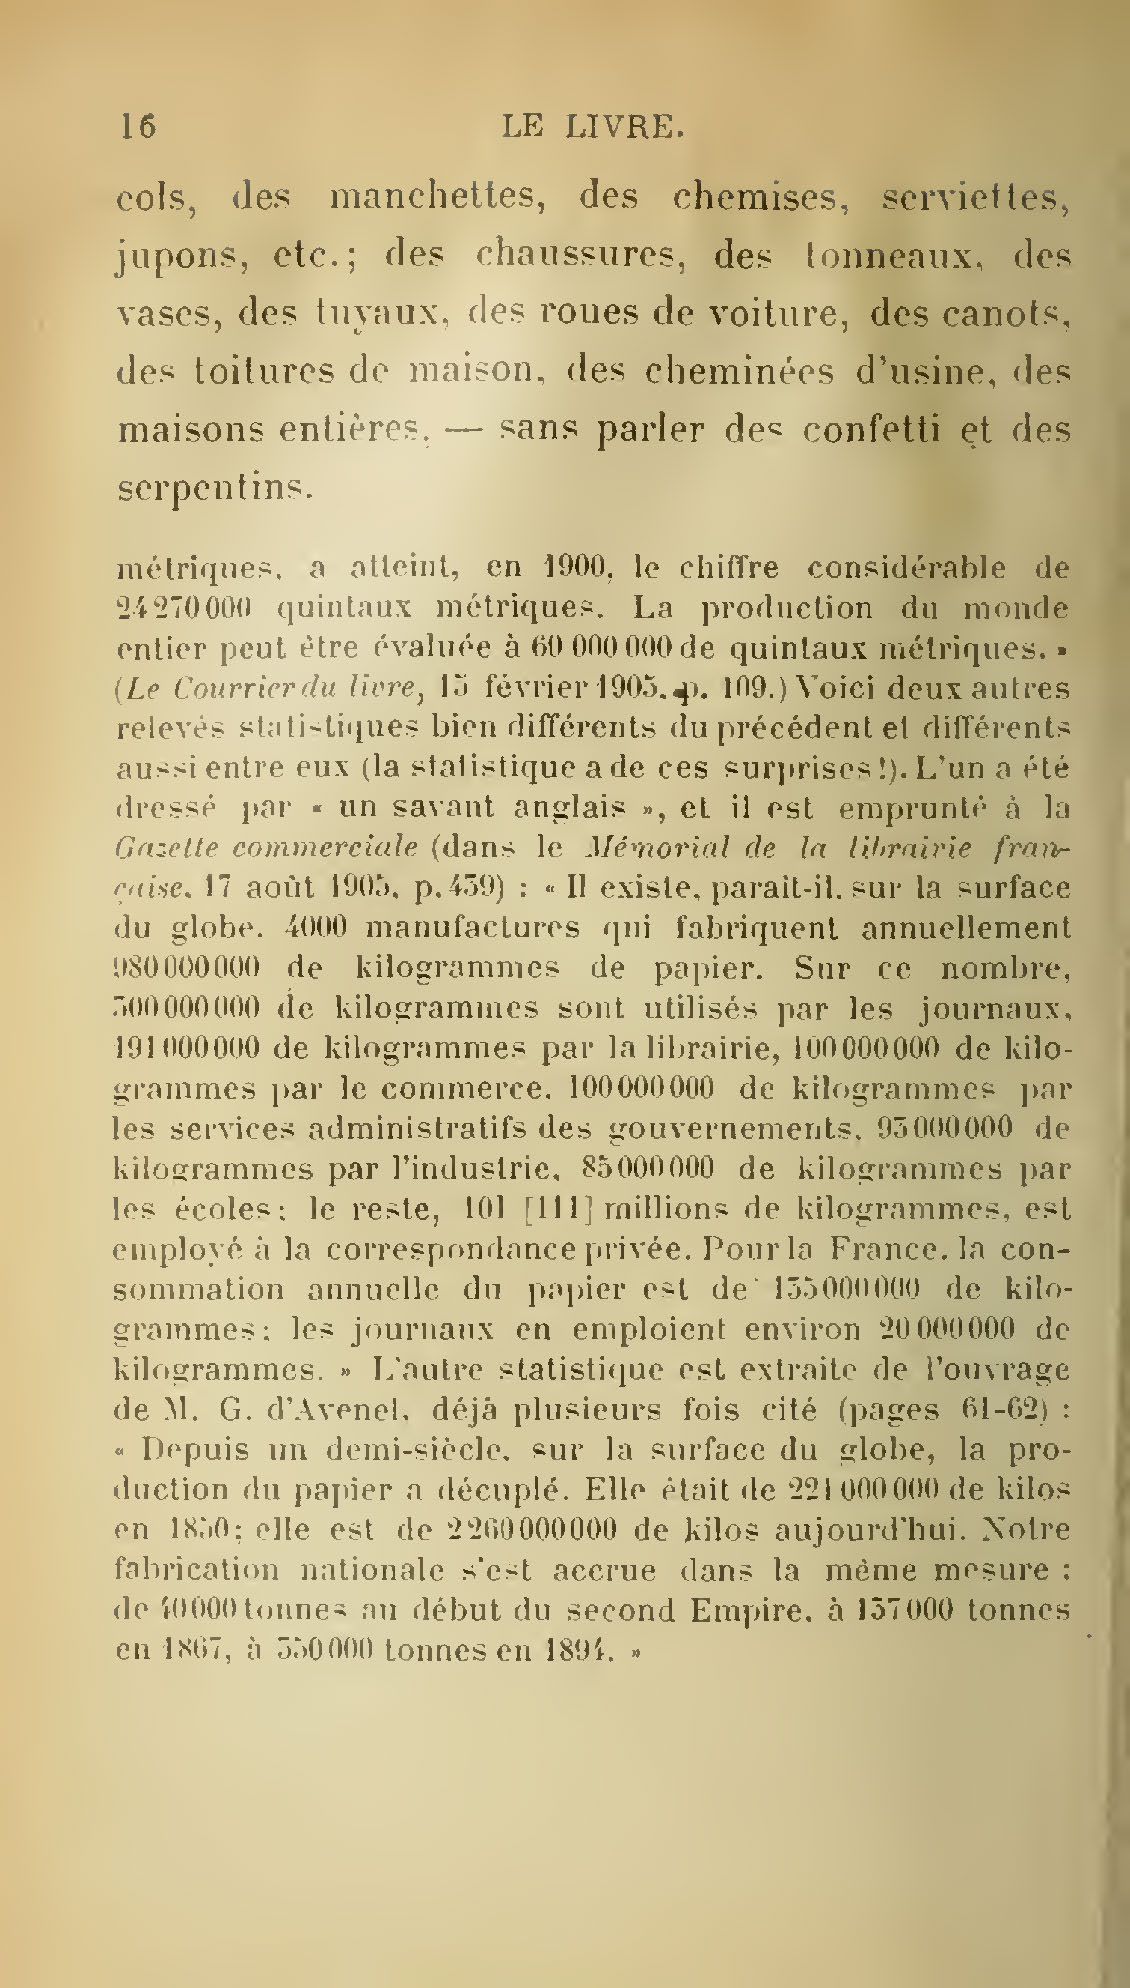 Albert Cim, Le Livre, t. III, p. 16.